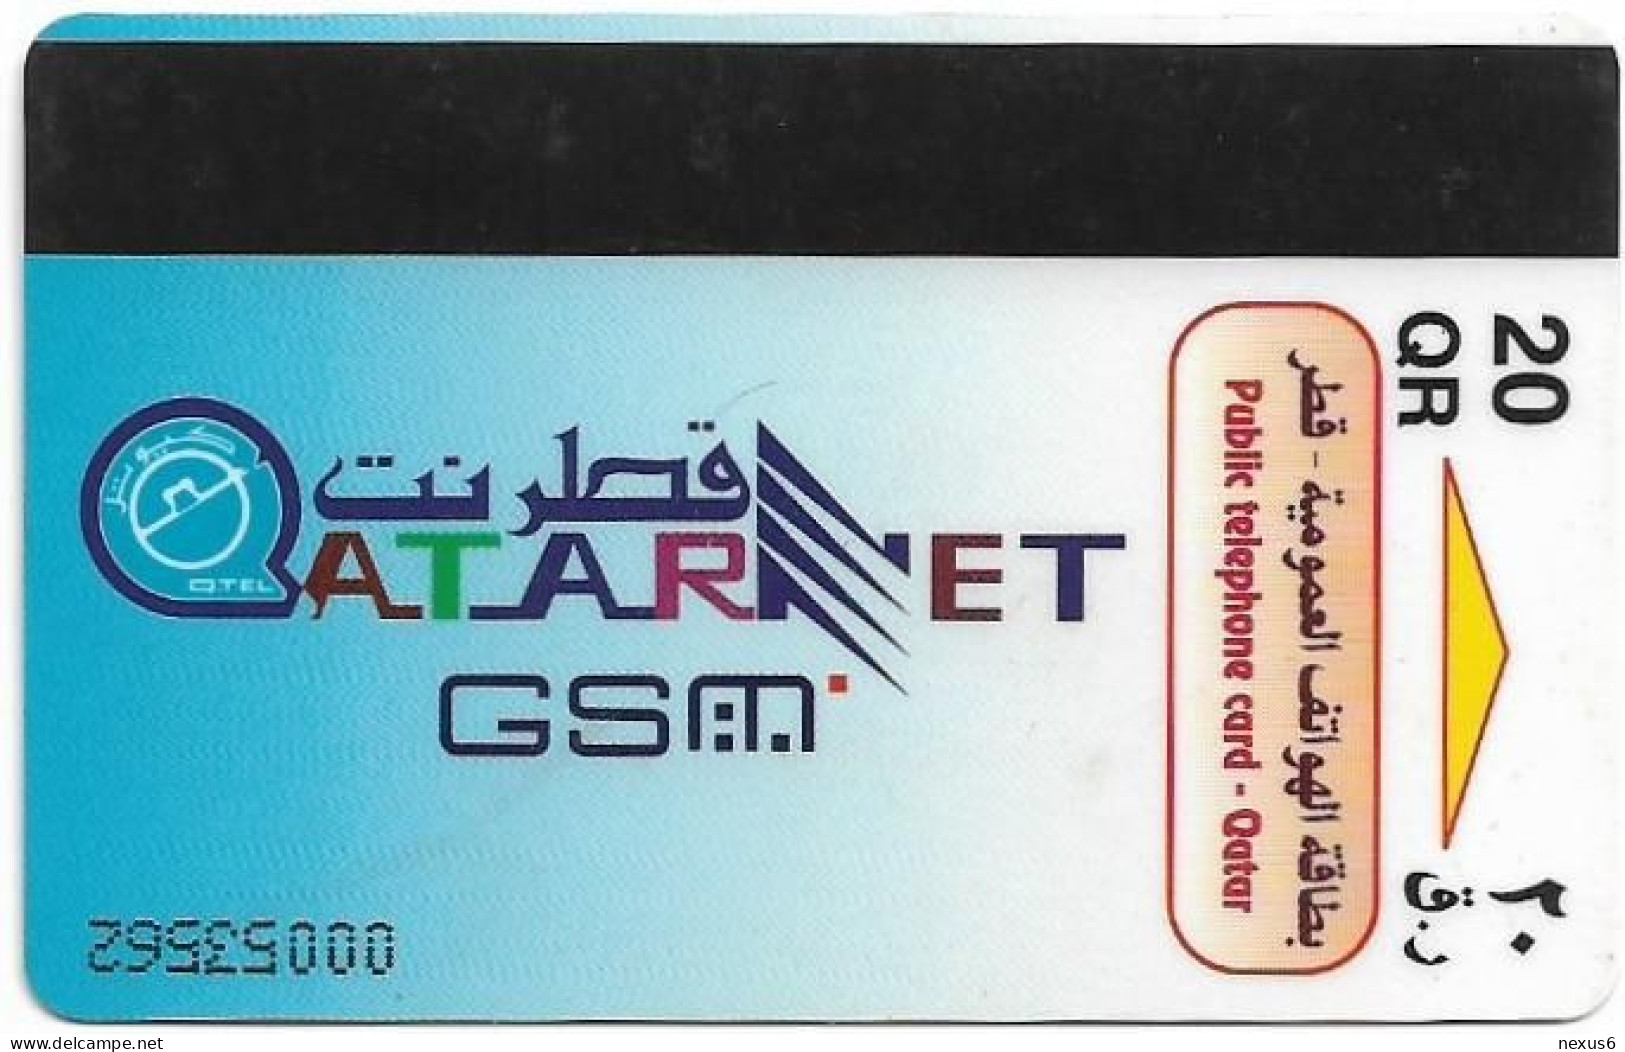 Qatar - Q-Tel - Autelca - Logo Of Arabian Horse Show '96, 1996, 20QR, 60.000ex, Used - Qatar